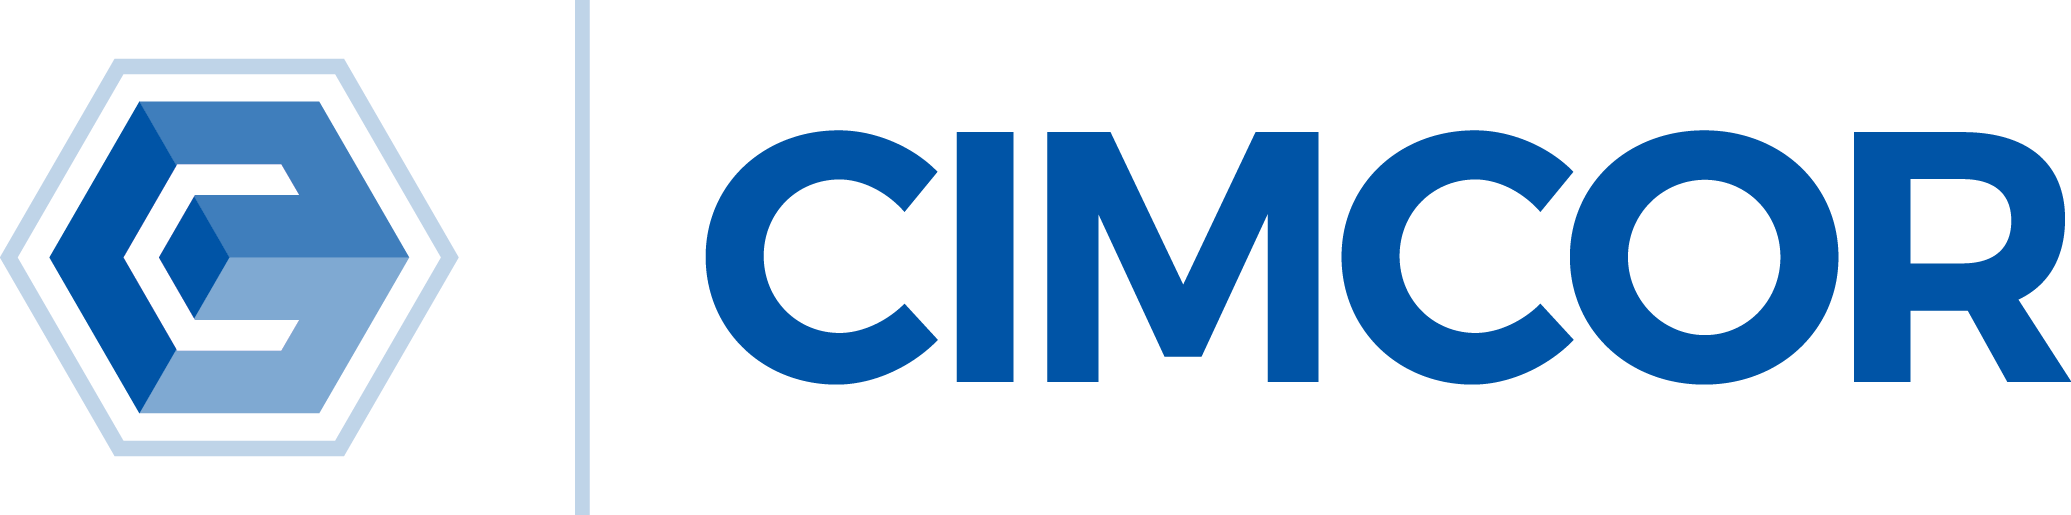 Cimcorcimtrak Logo